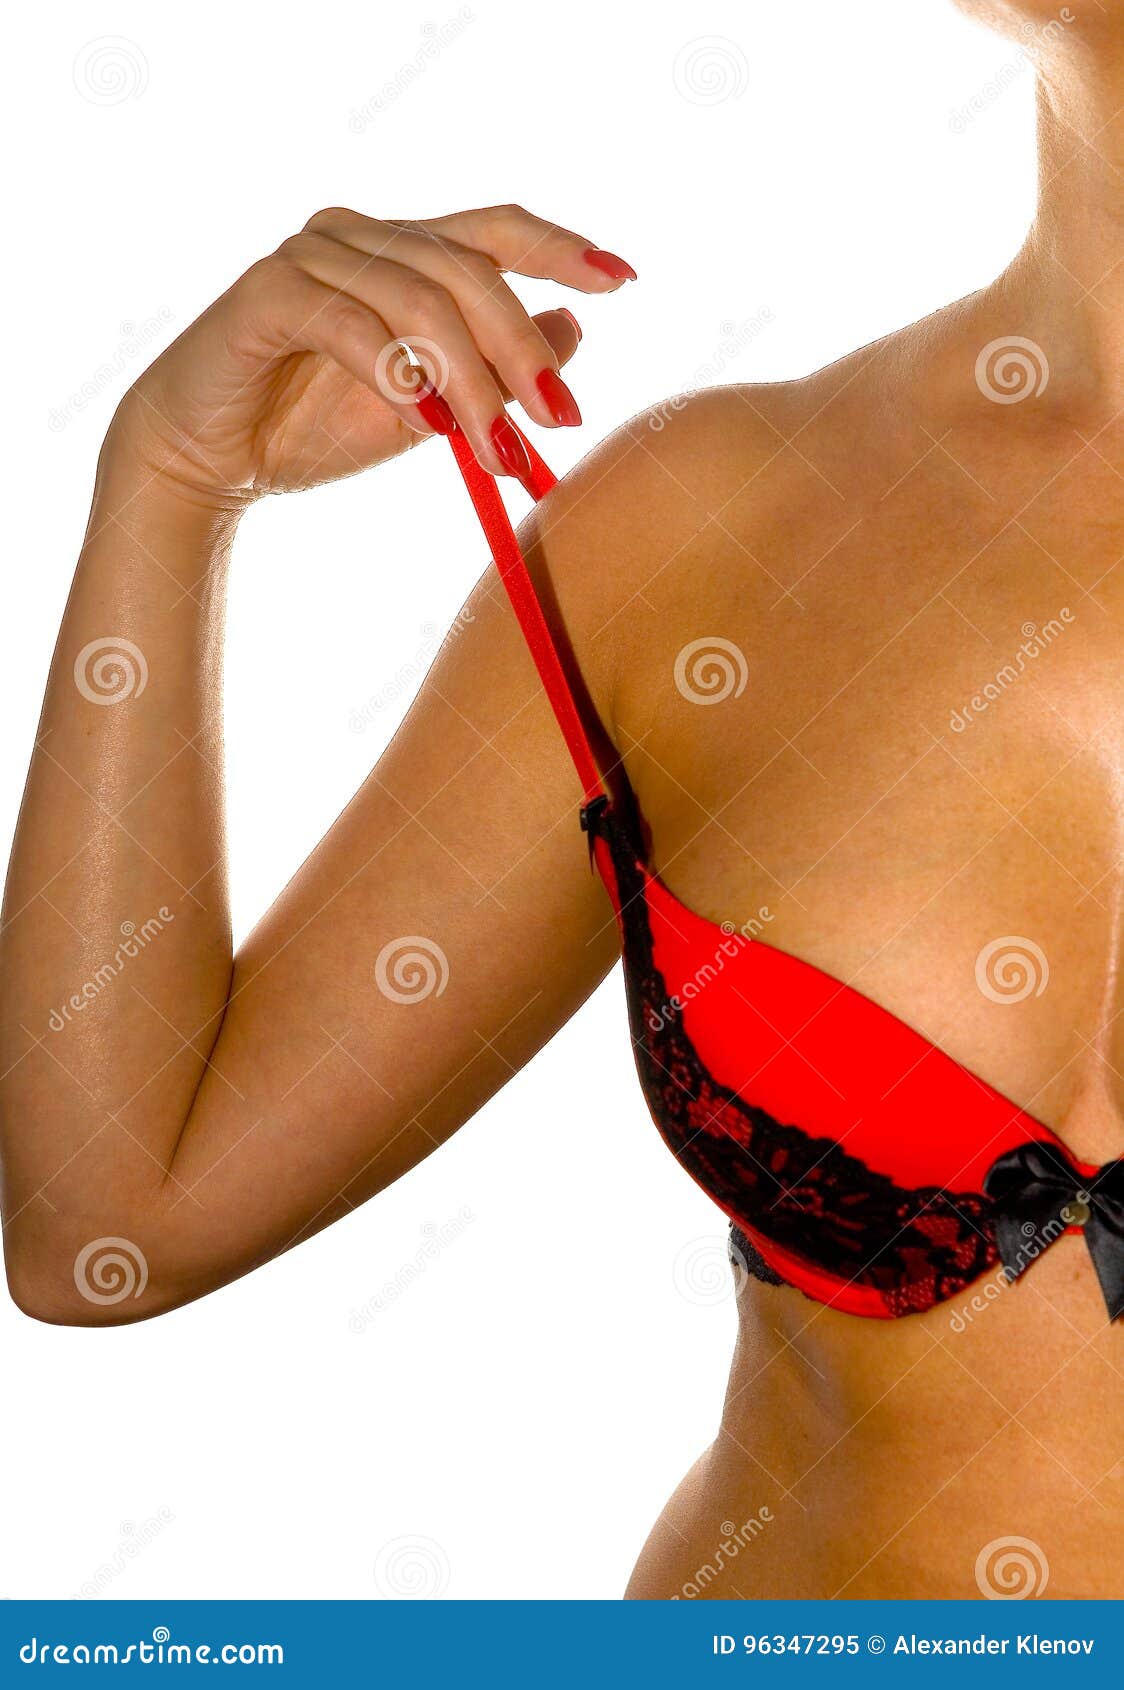 dameon starks add photo girl take off her bra